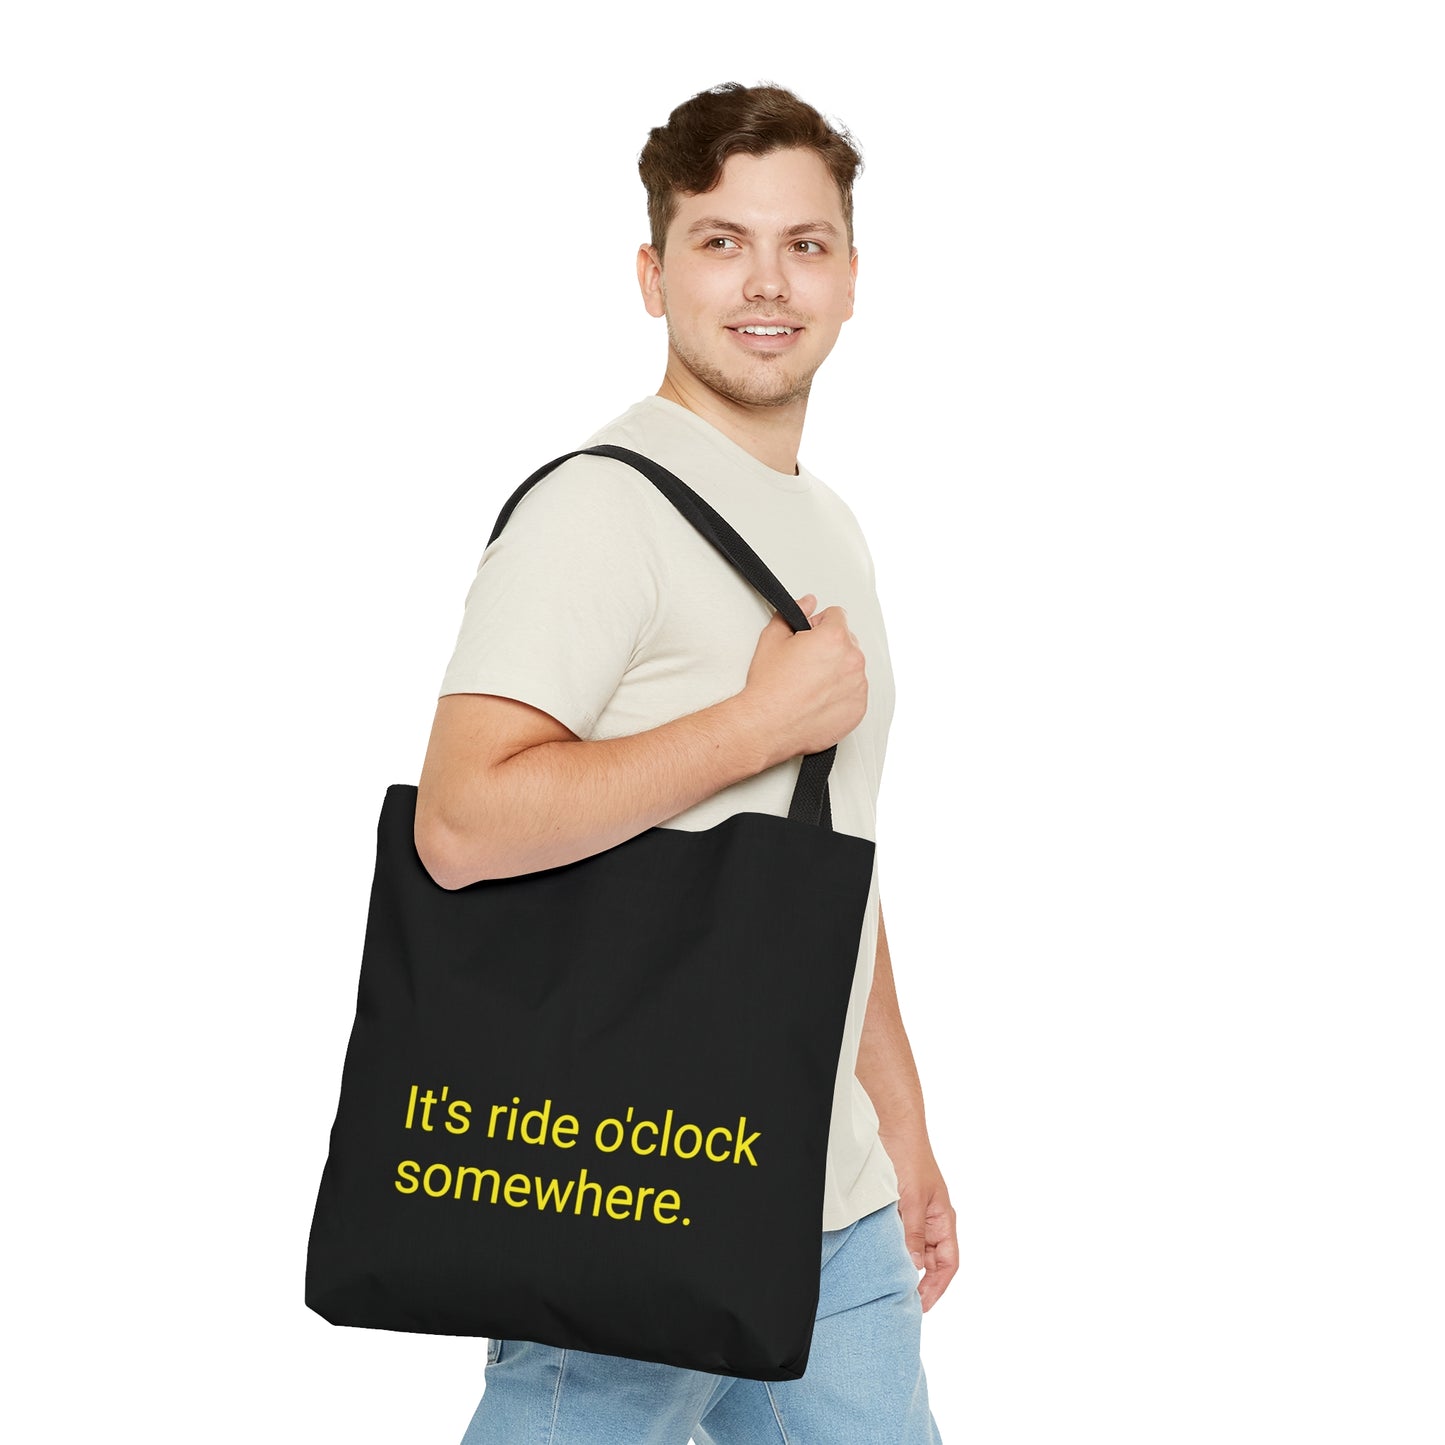 It's ride o'Clock somewhere tote bag